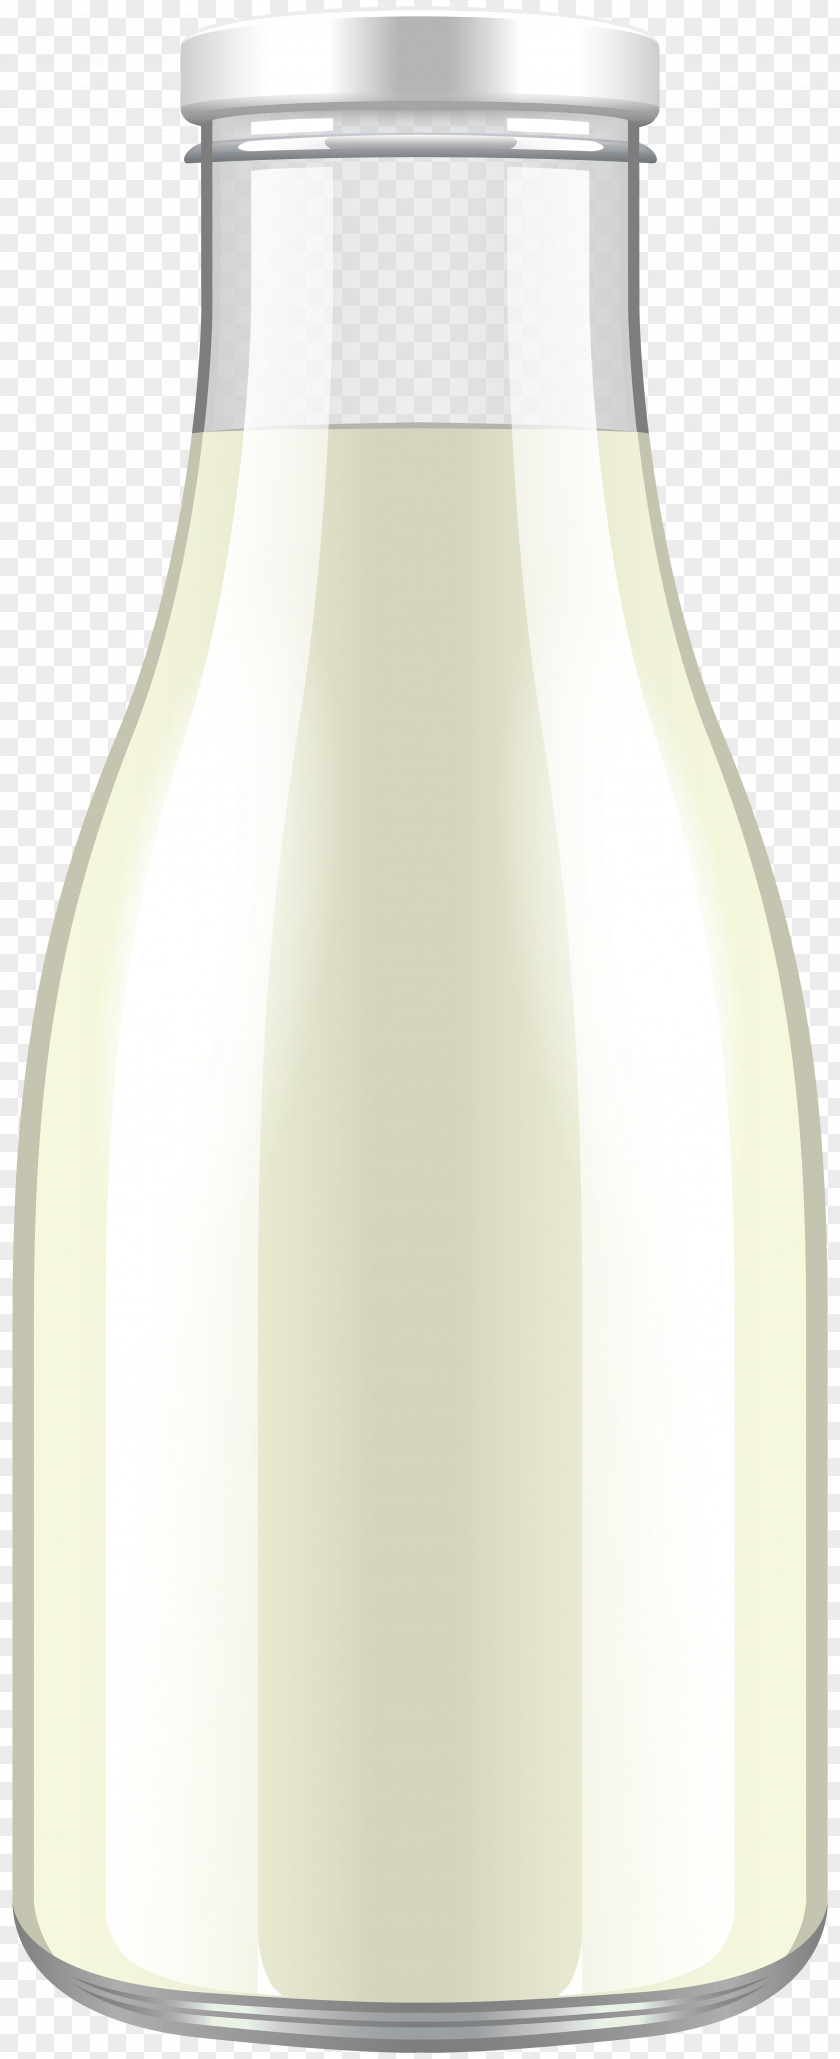 Bottle Of Milk Clip Art Image Glass PNG